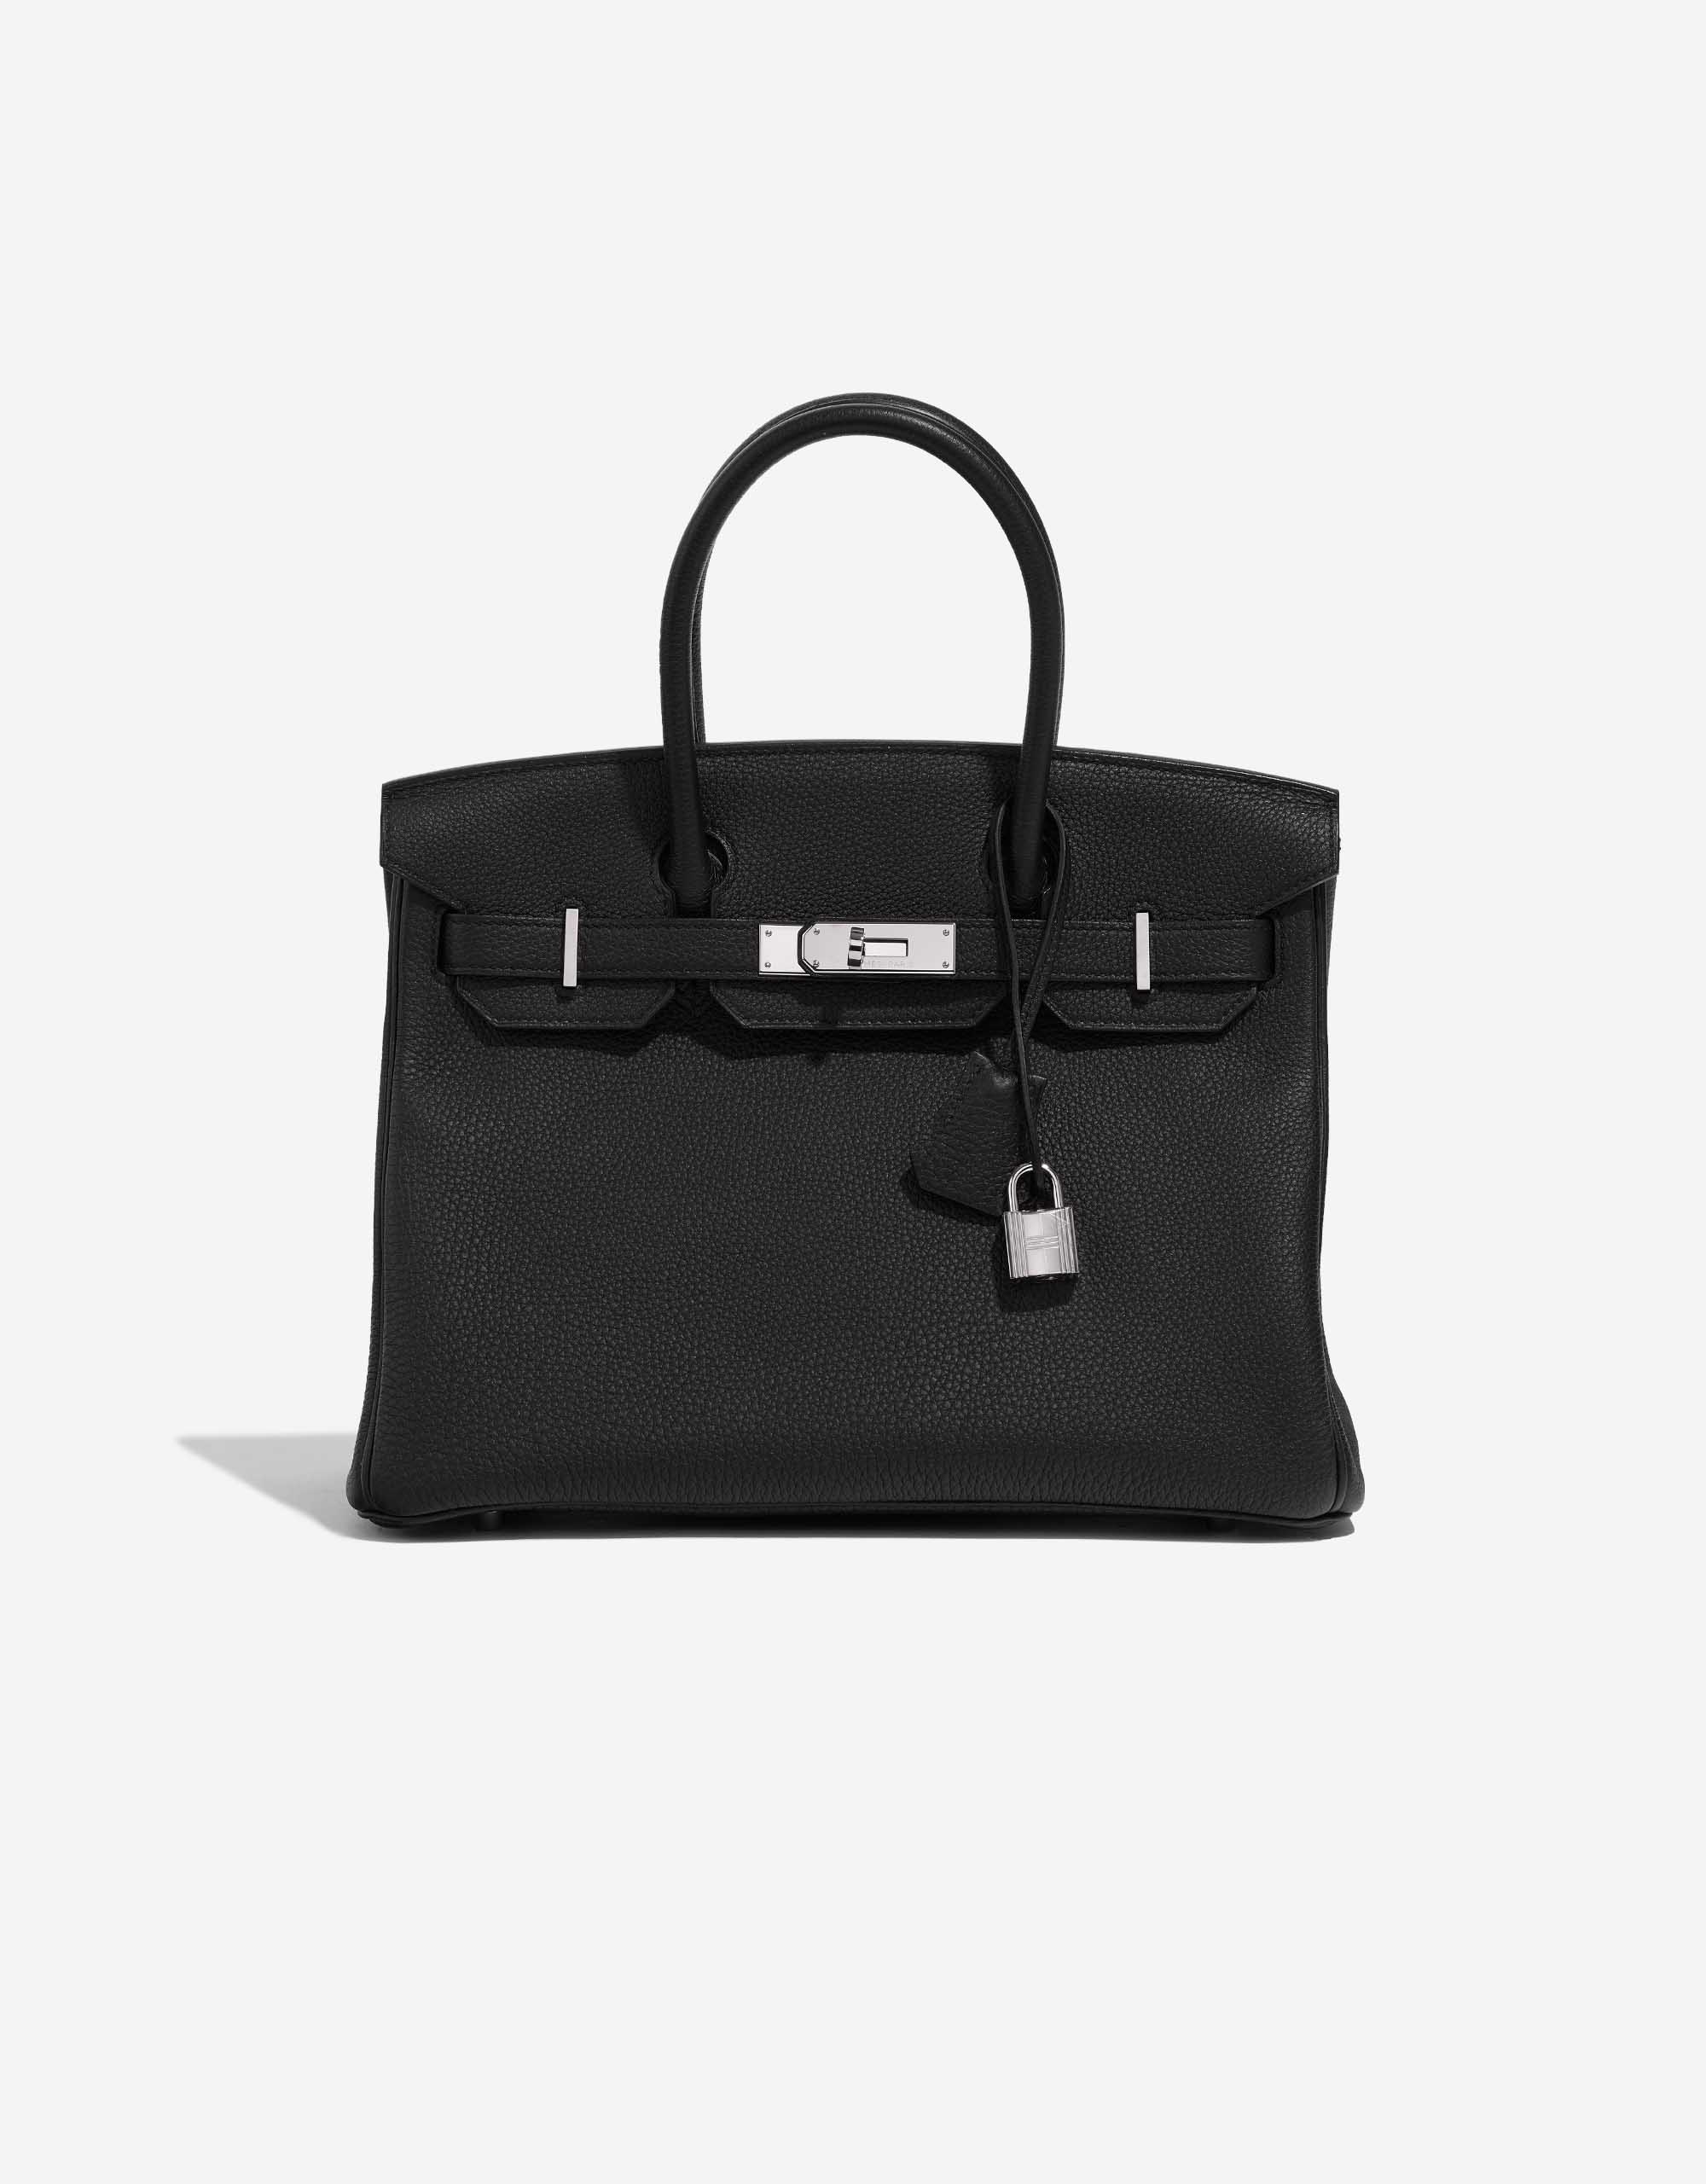 Hermès Birkin 30 Togo Black | SACLÀB